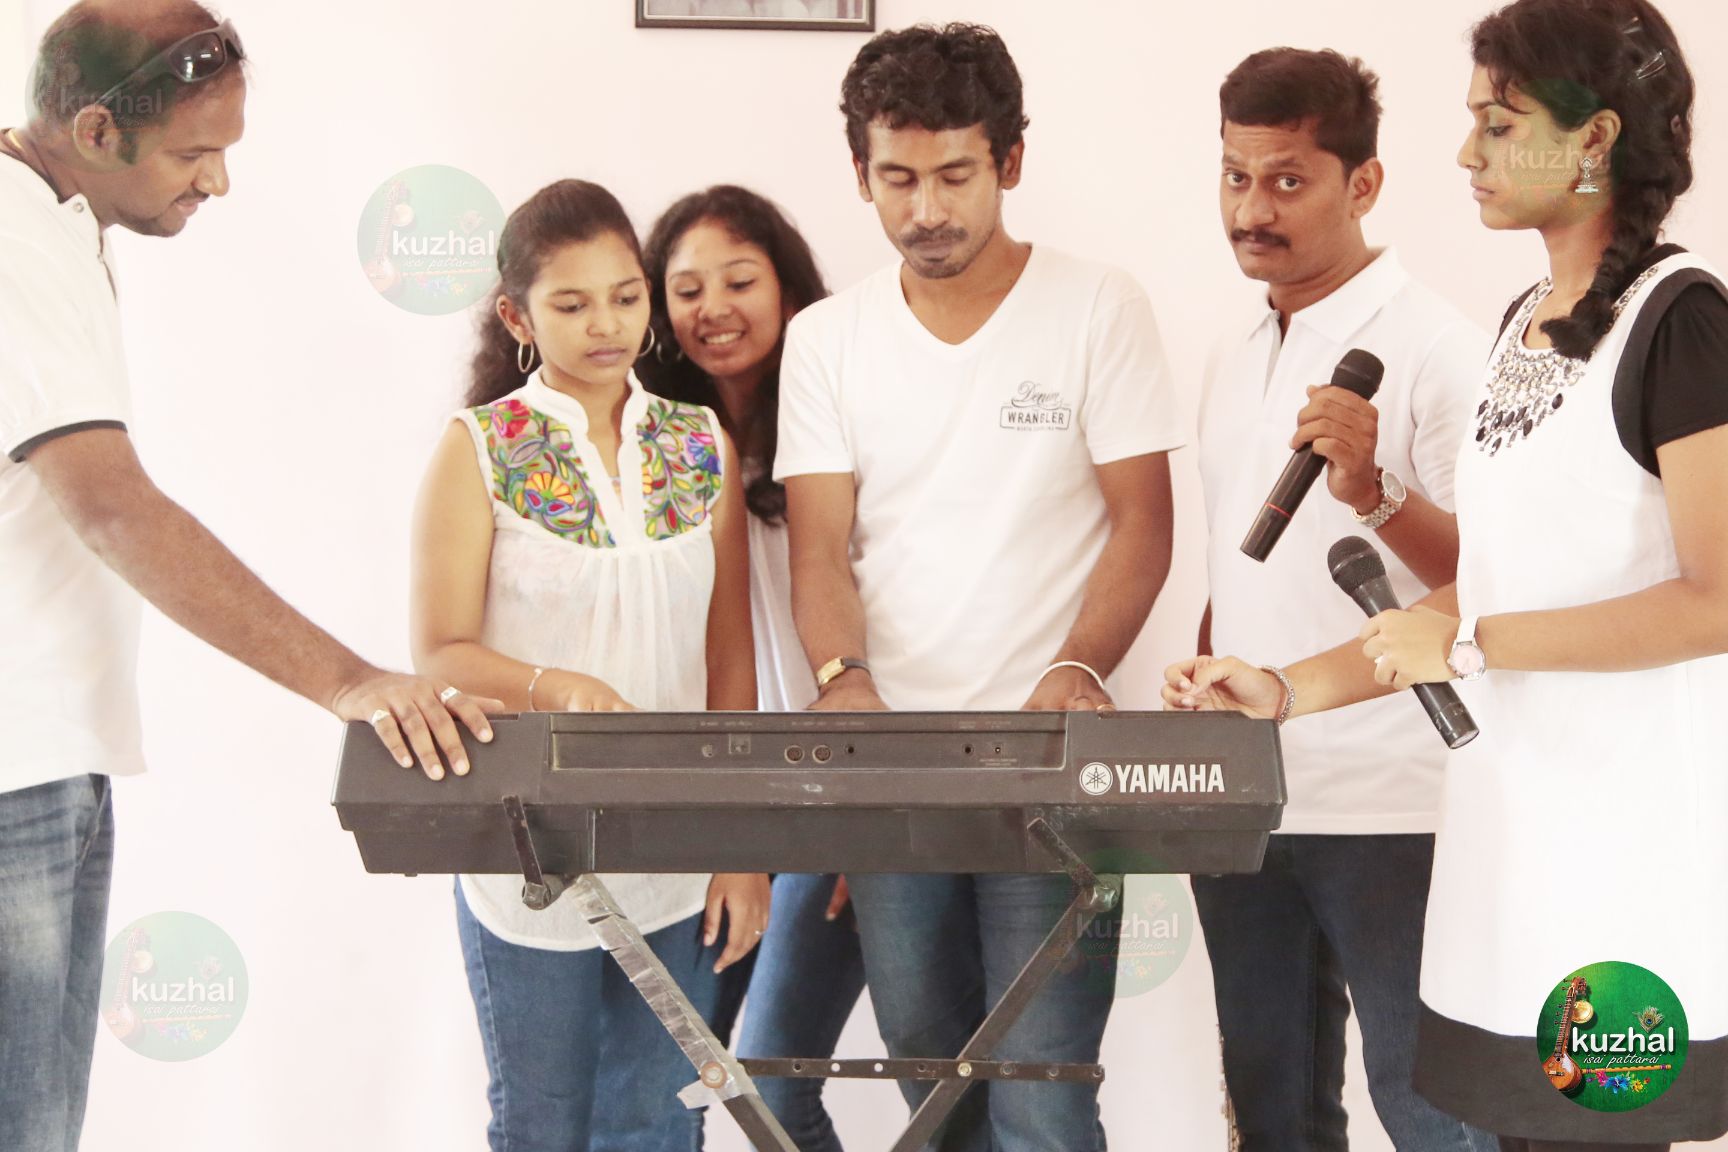 Music classes Chennai Tamilnadu Music academy in Chennai